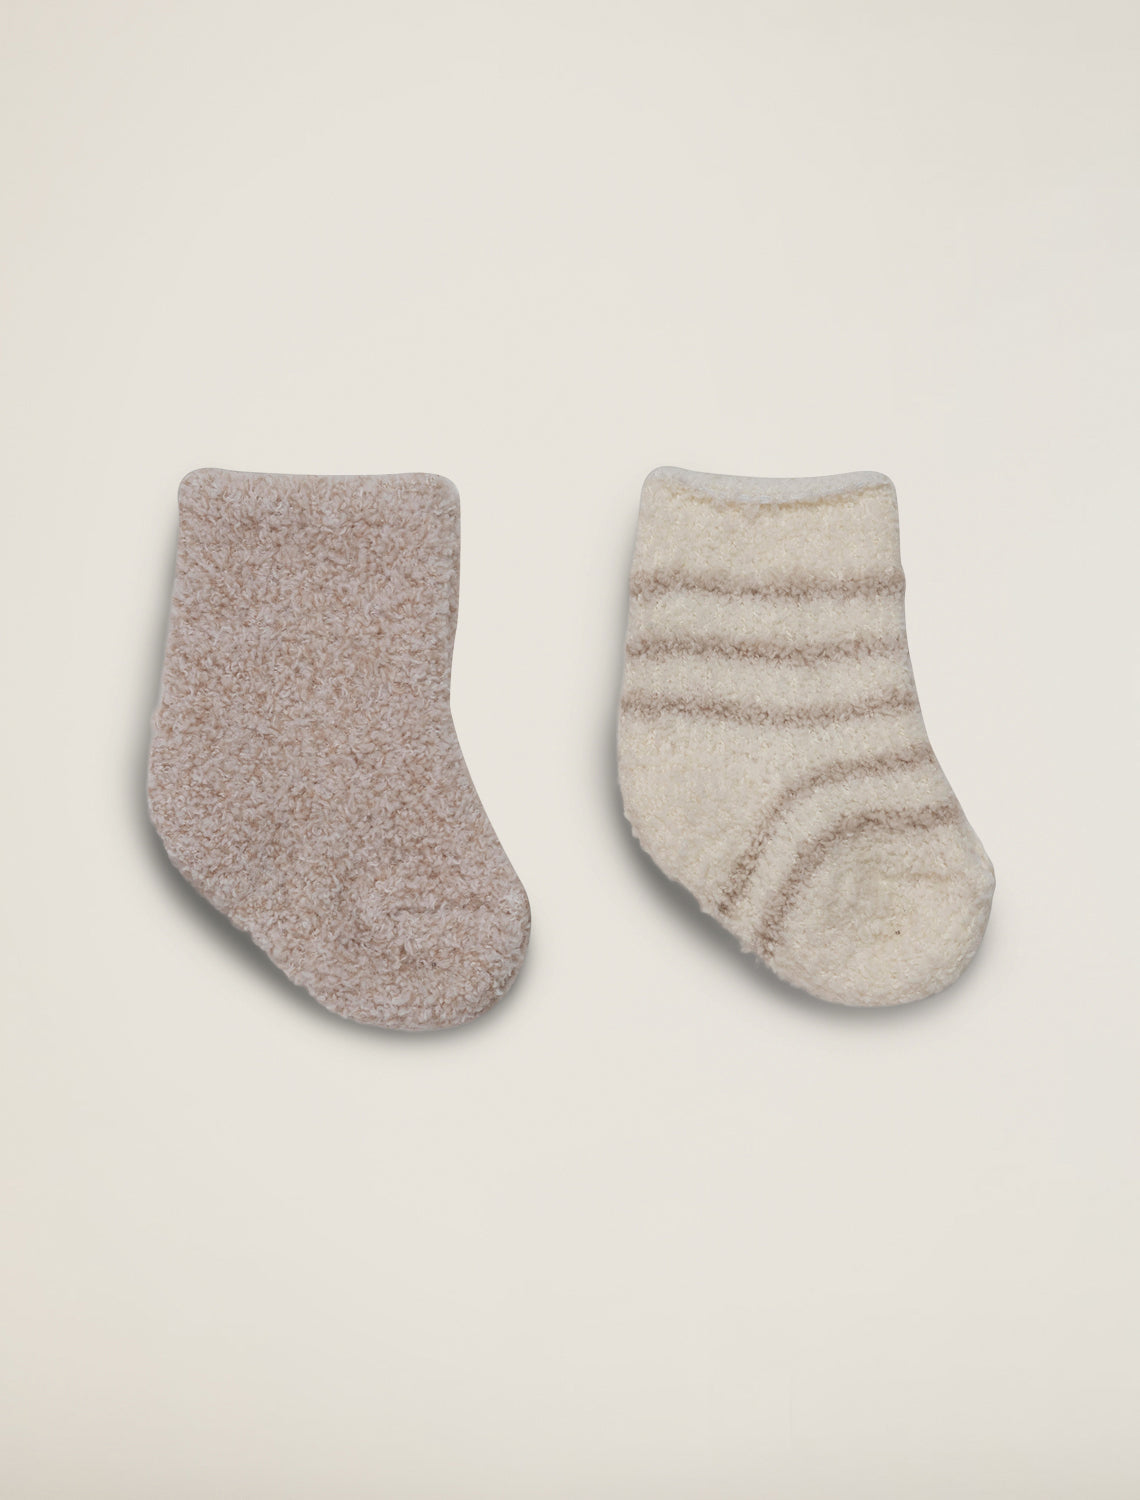 Cozychic Infant Socks 2 Pair